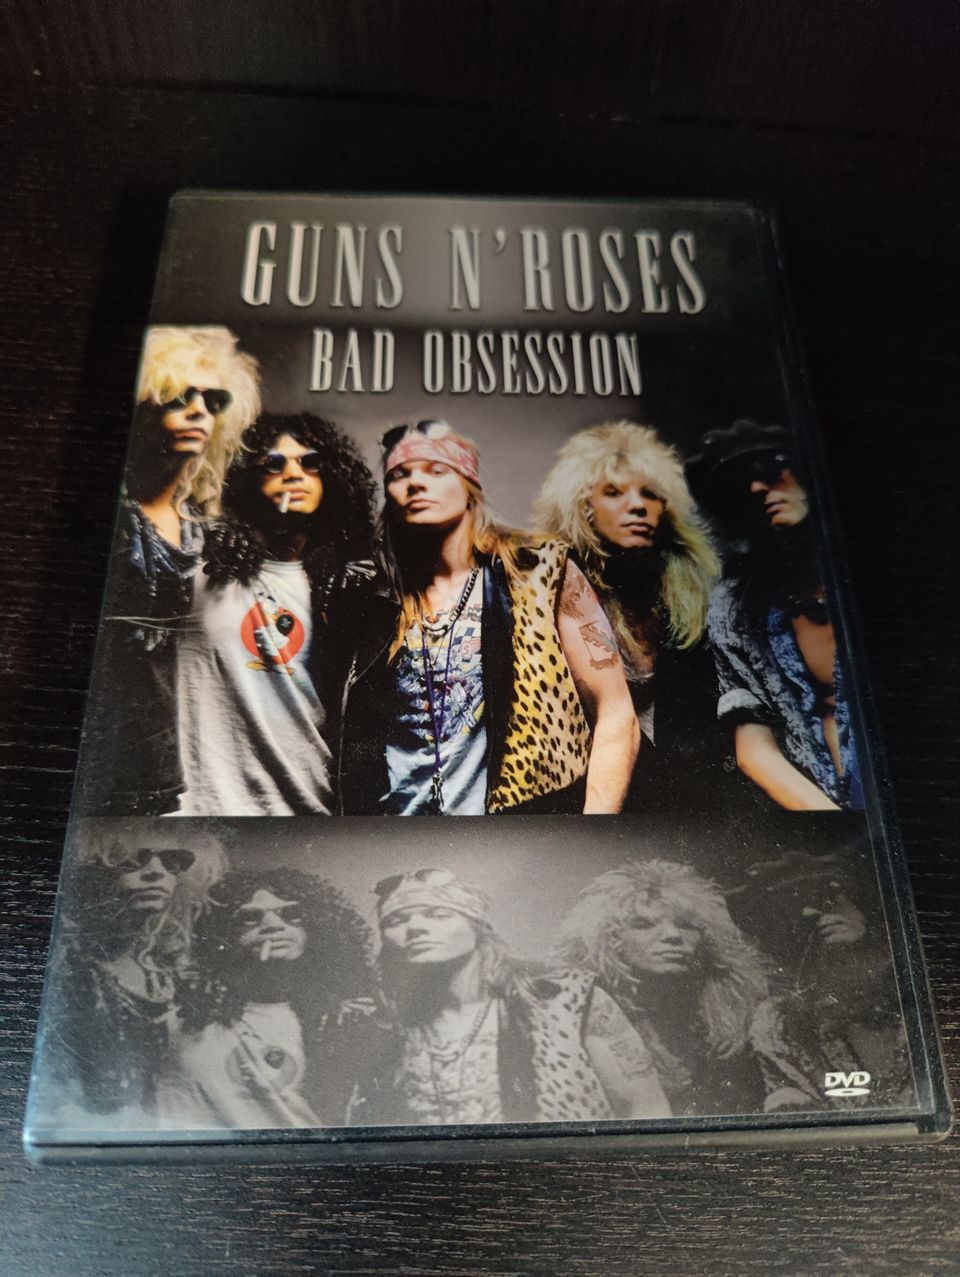 Guns n roses Bad obsession DVD / CD